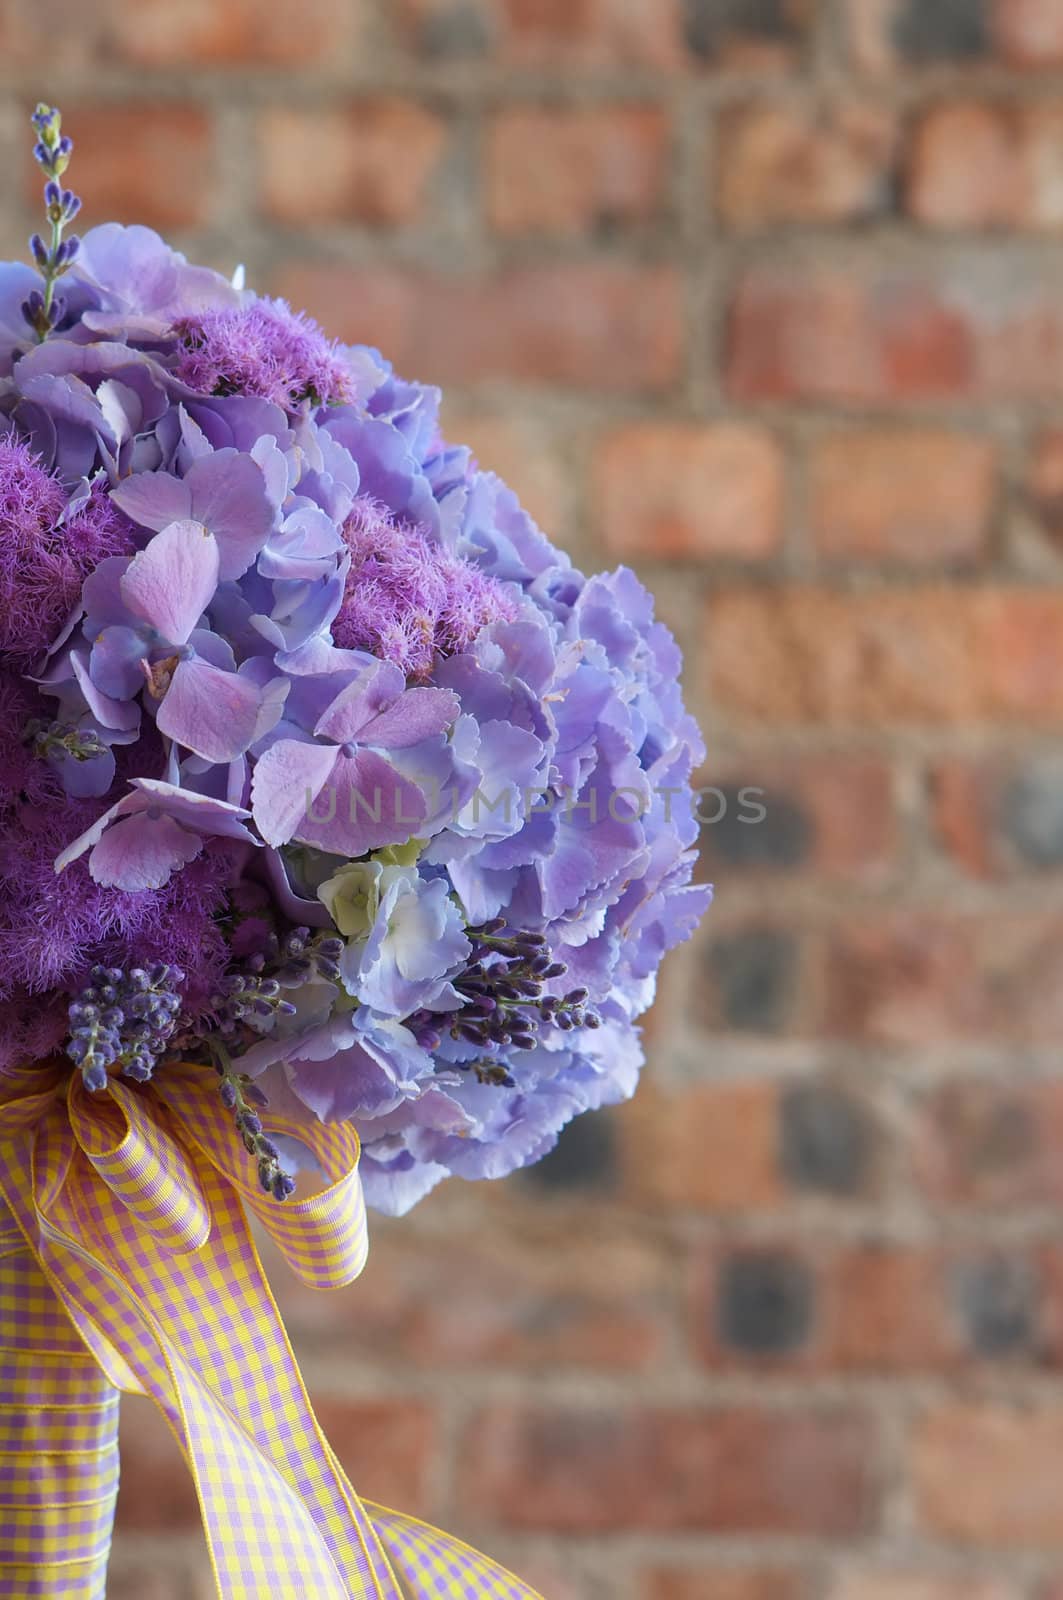 A colorful purple bridal bouquet of flowers by Deimages